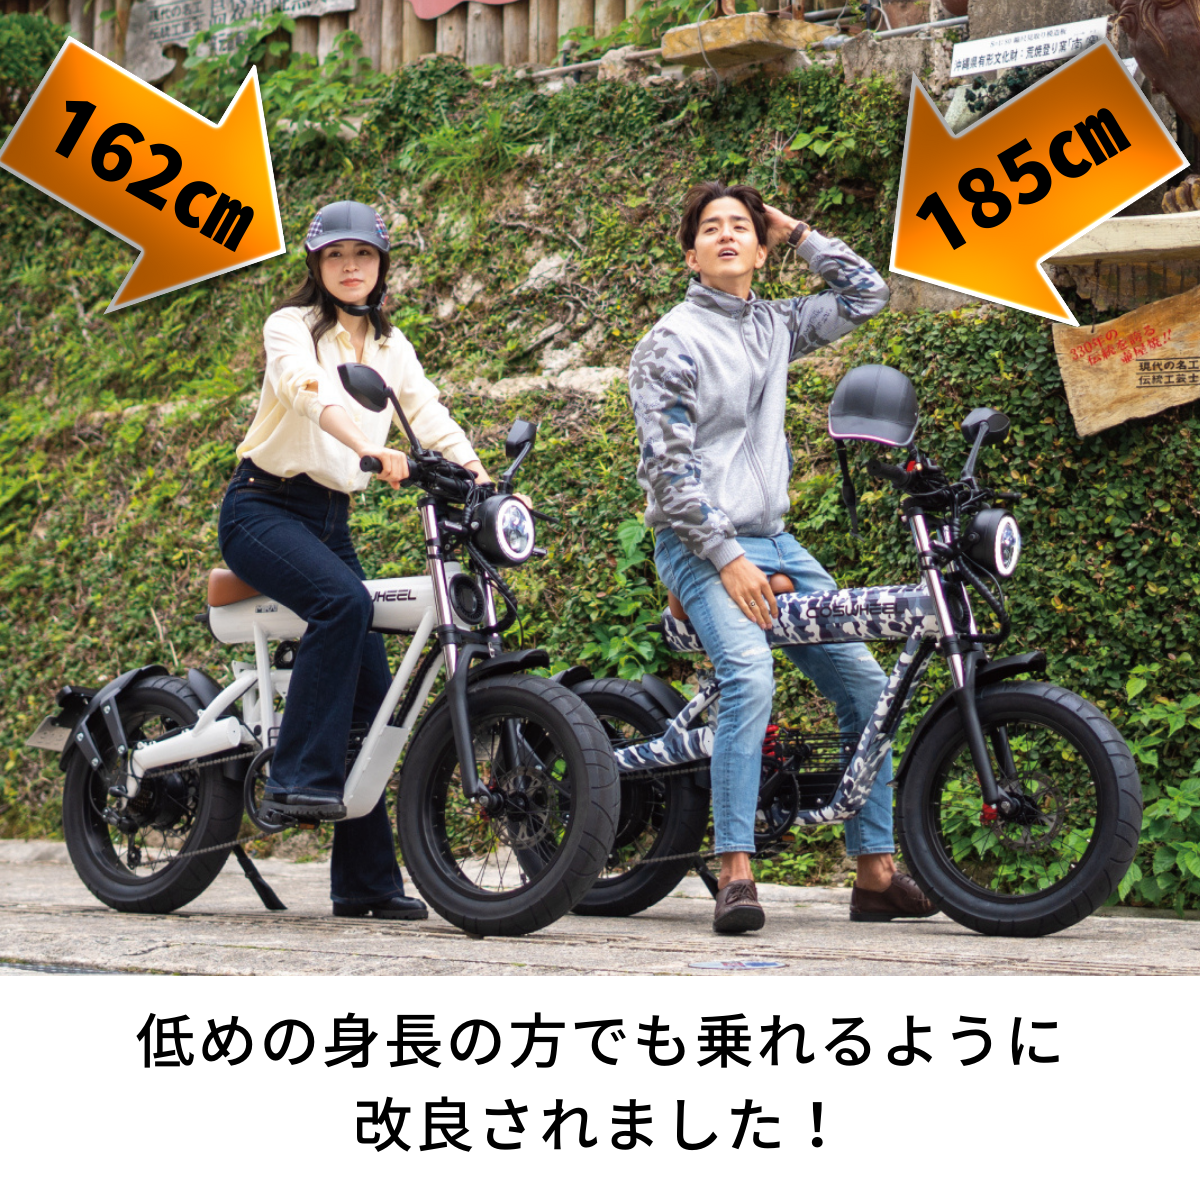 COSWHEEL MIRAI S 電動バイク （公道走行可能 / 原付一種モデル）全4色